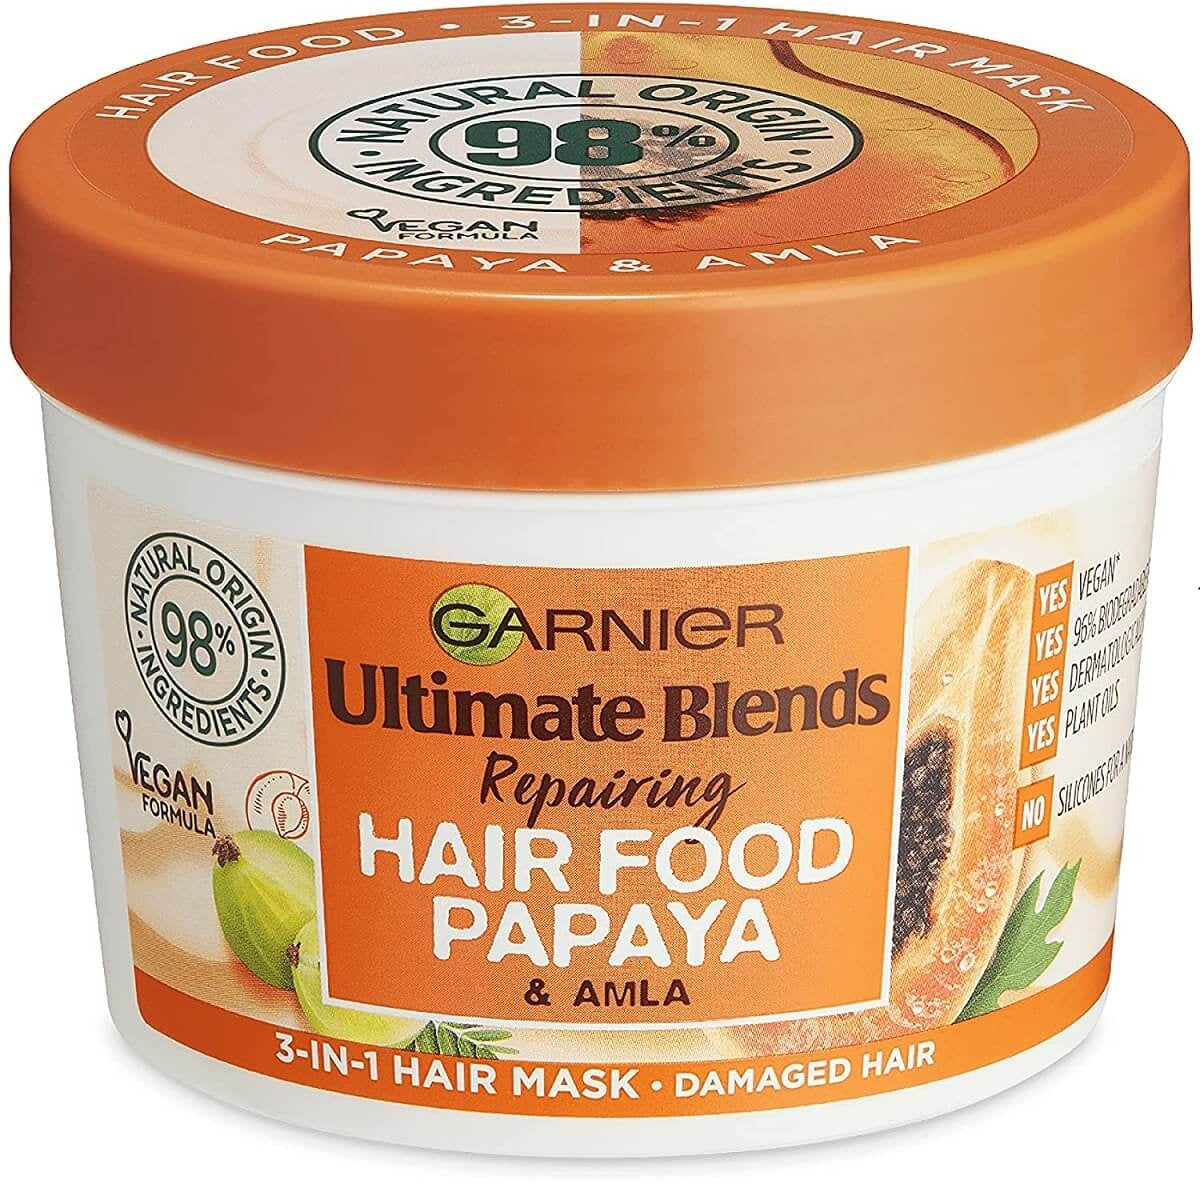 Garnier (UK/Germany) Ultimate Blends Hair Food Papaya & Amla For Damaged Hair Mask 400ml